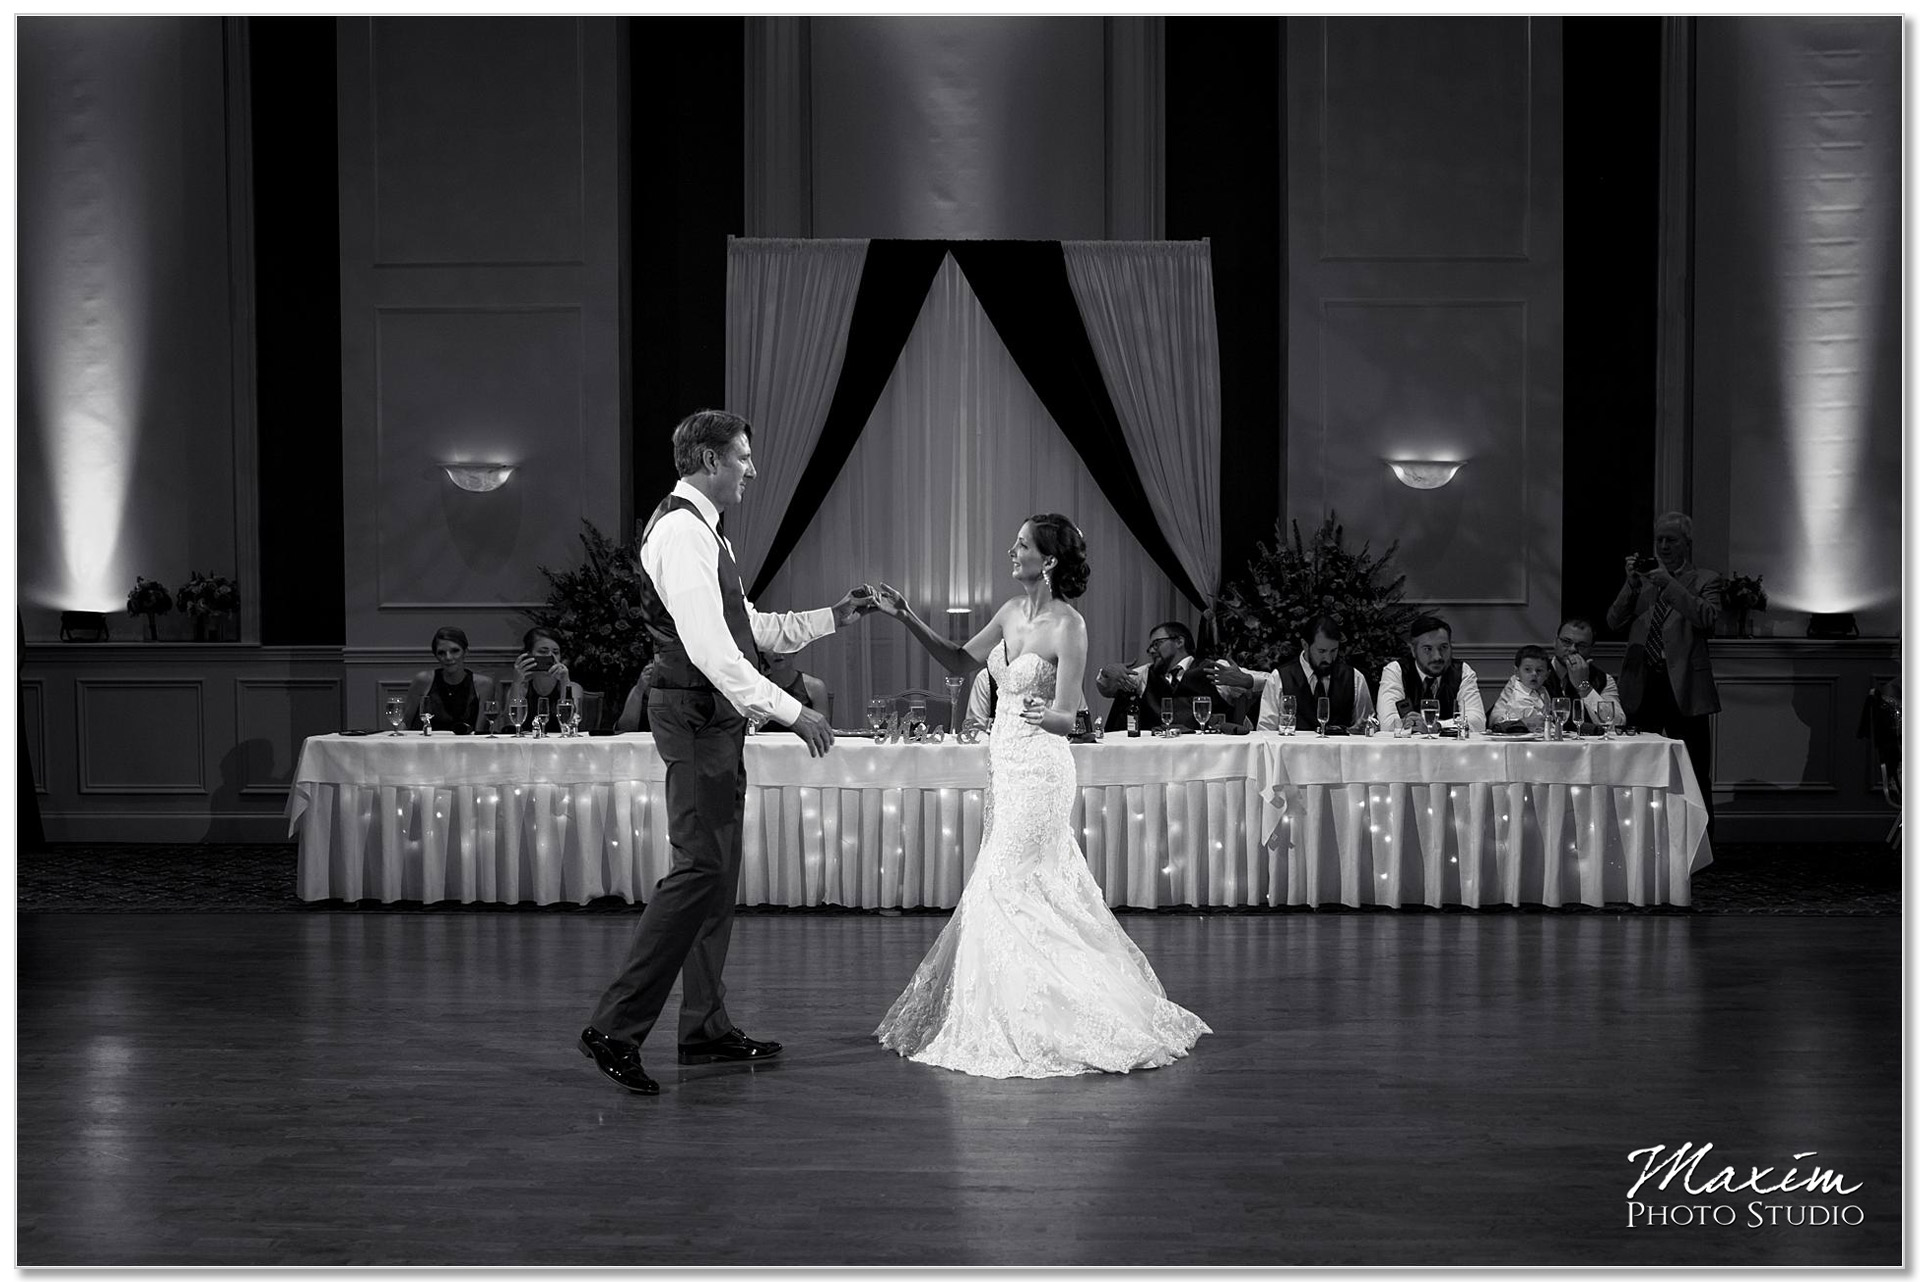 The Grand Ballroom Wedding Reception dancing